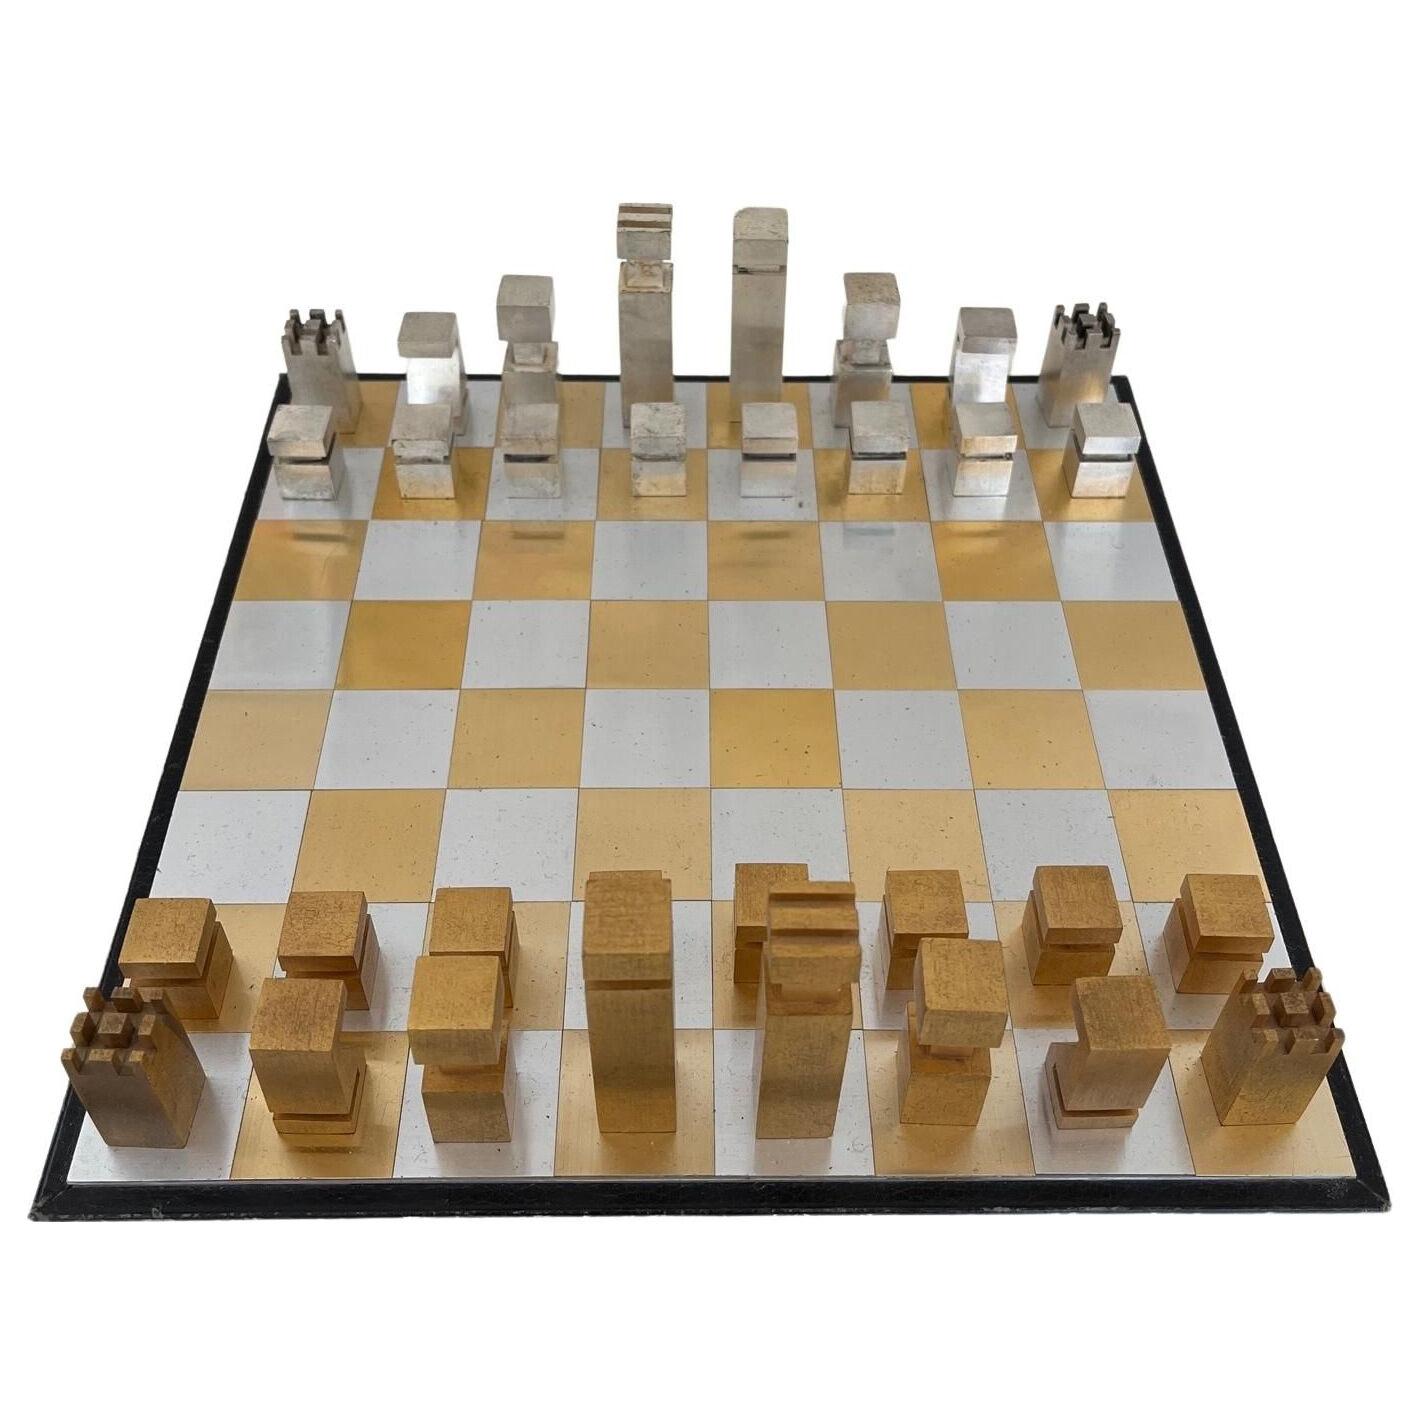 Hermes Chess set, circa 1980